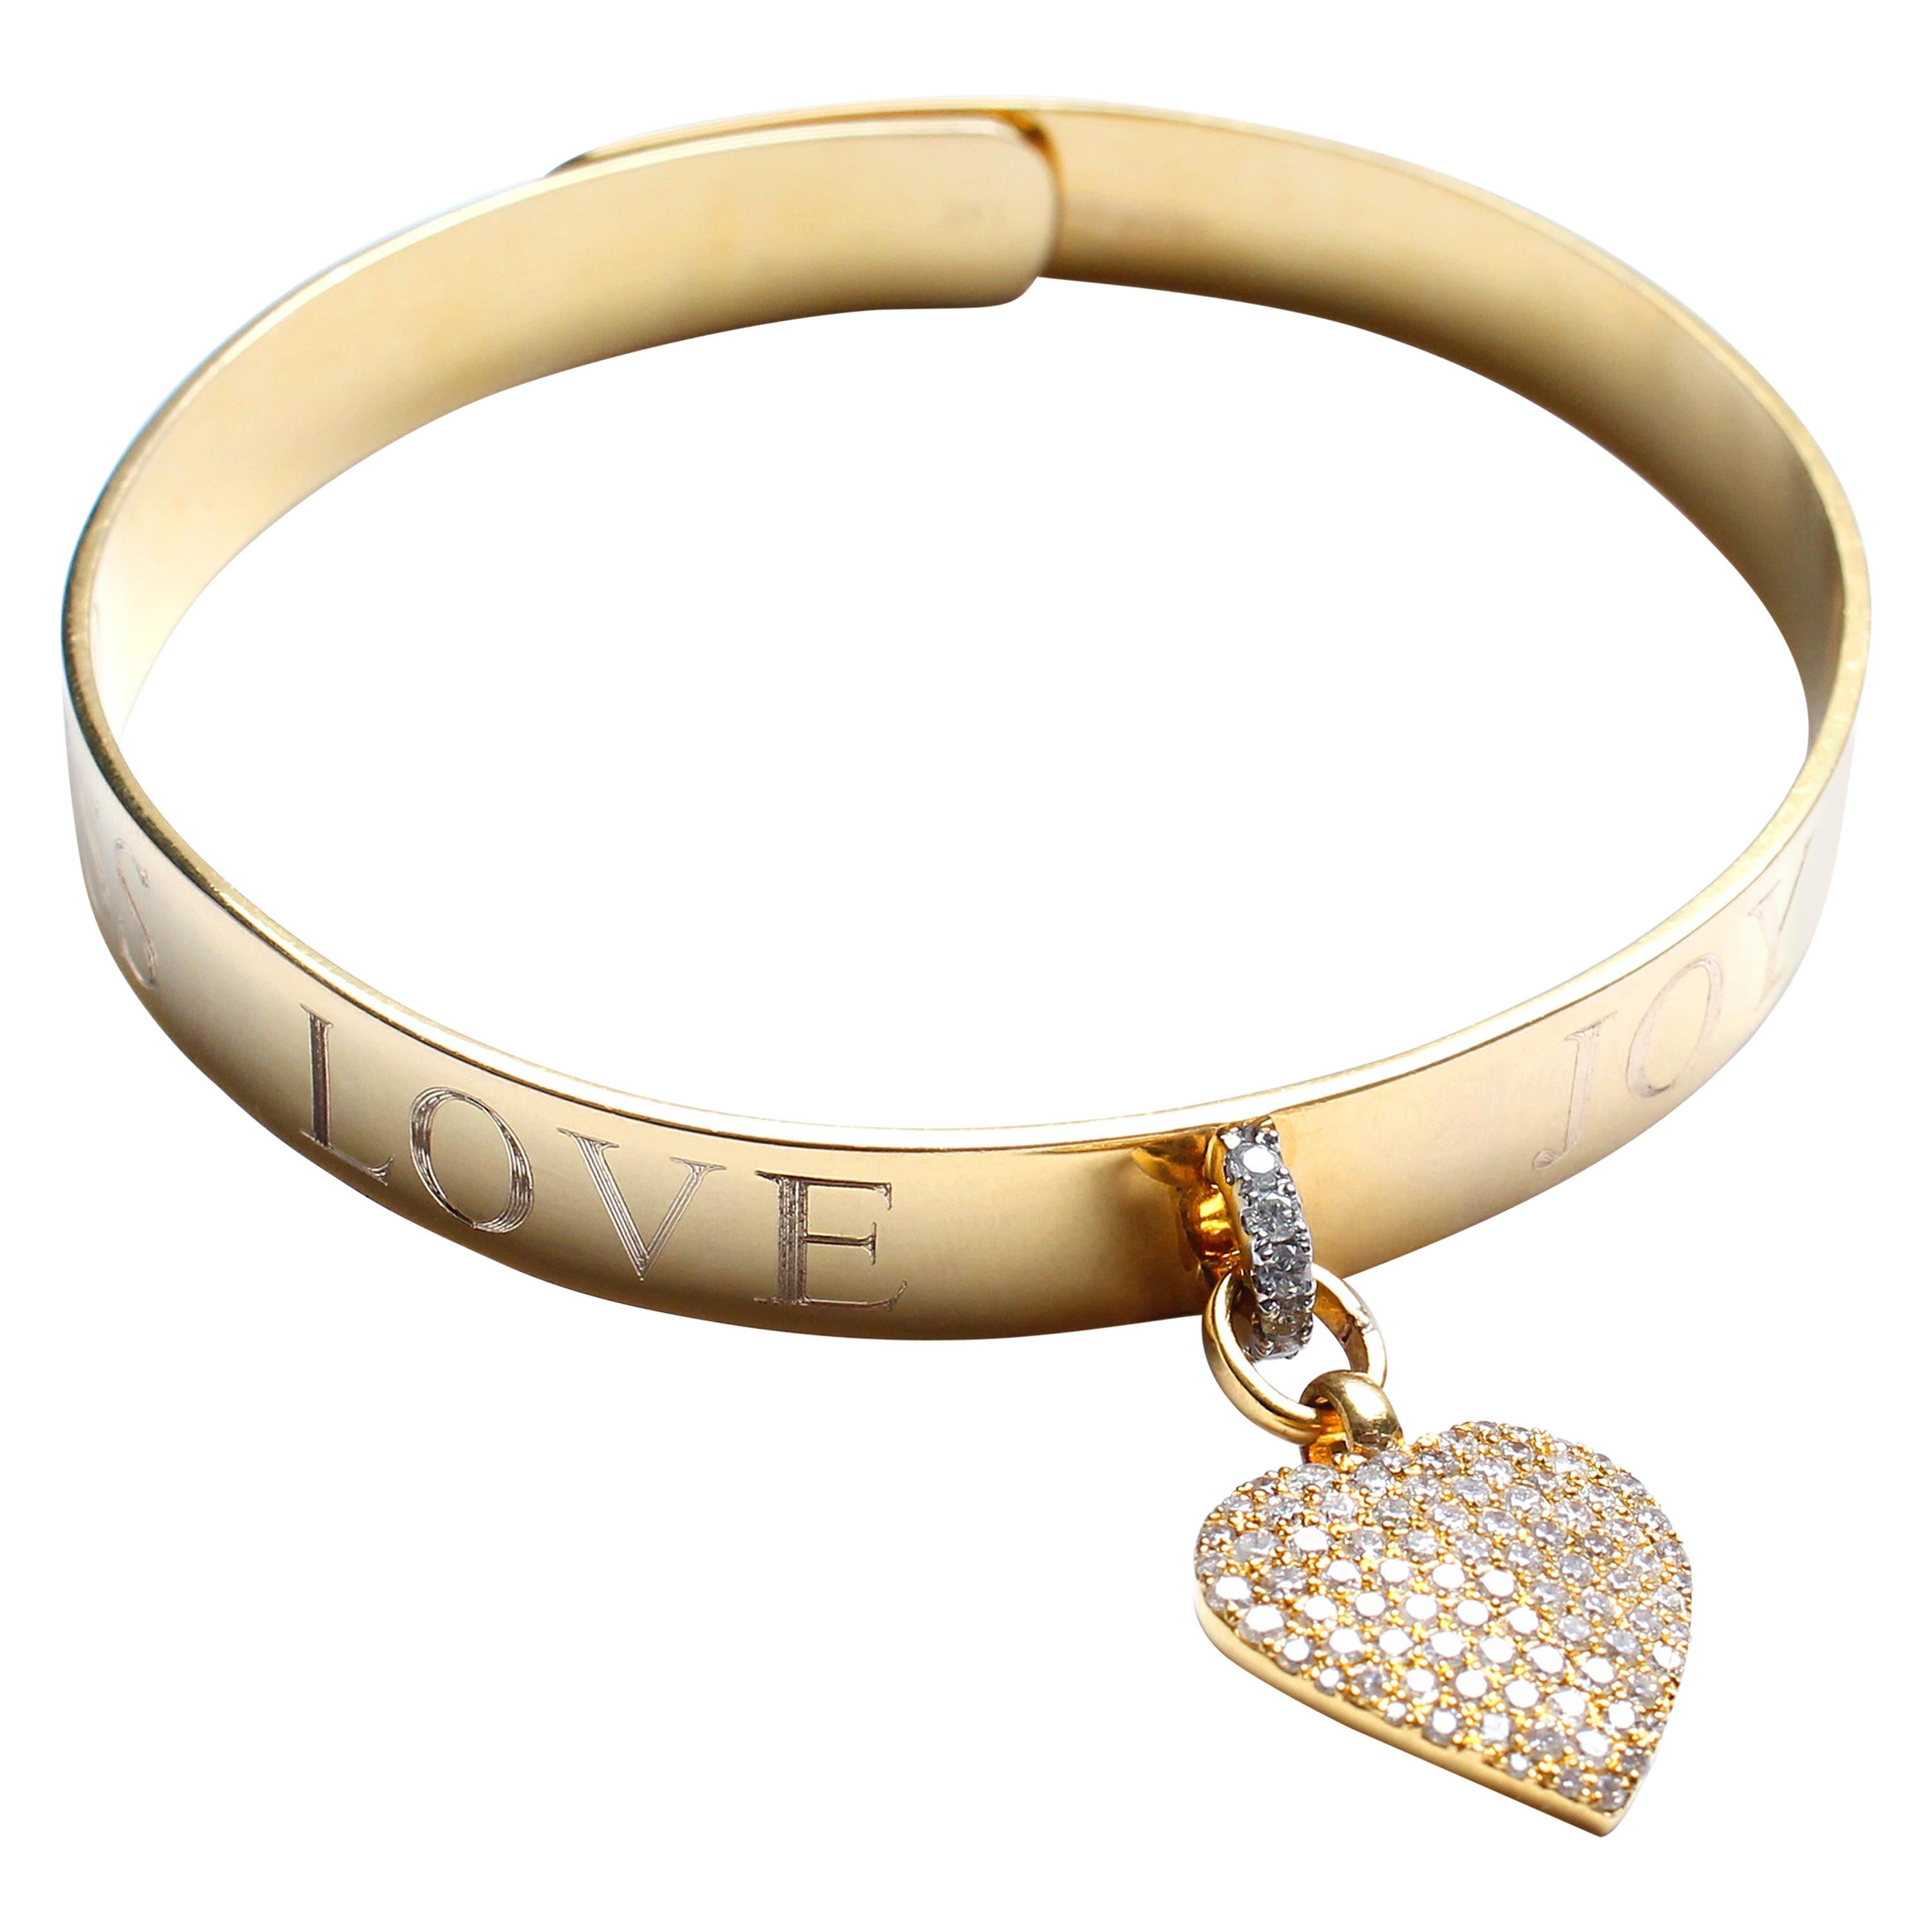 Clarissa Bronfman Signature 14 Karat Gold Diamond Engraved Heart Bangle